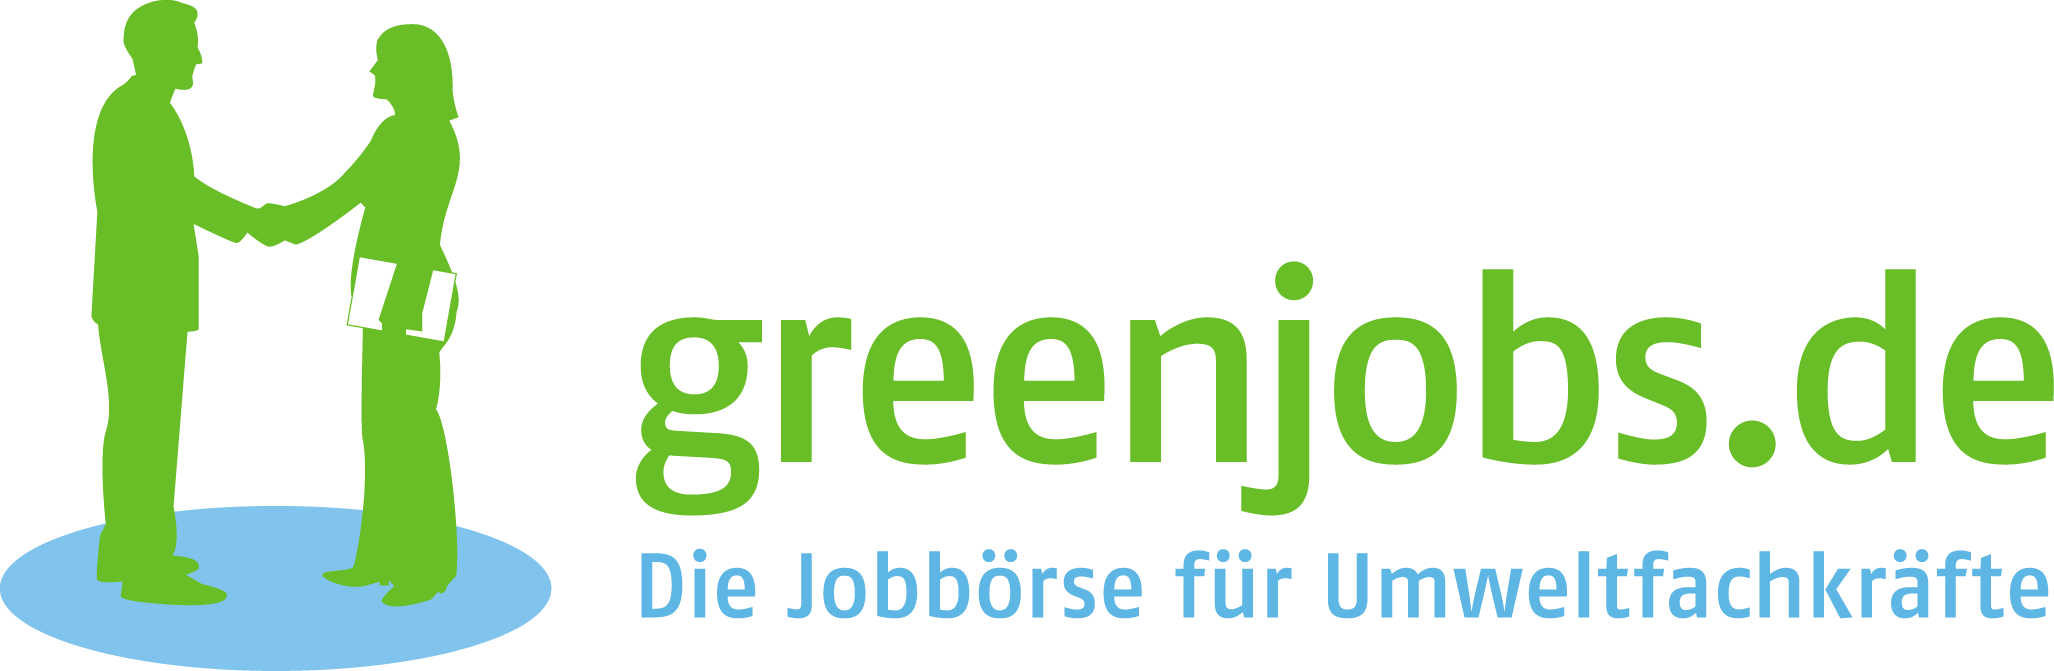 greenjobs_logo_rgb